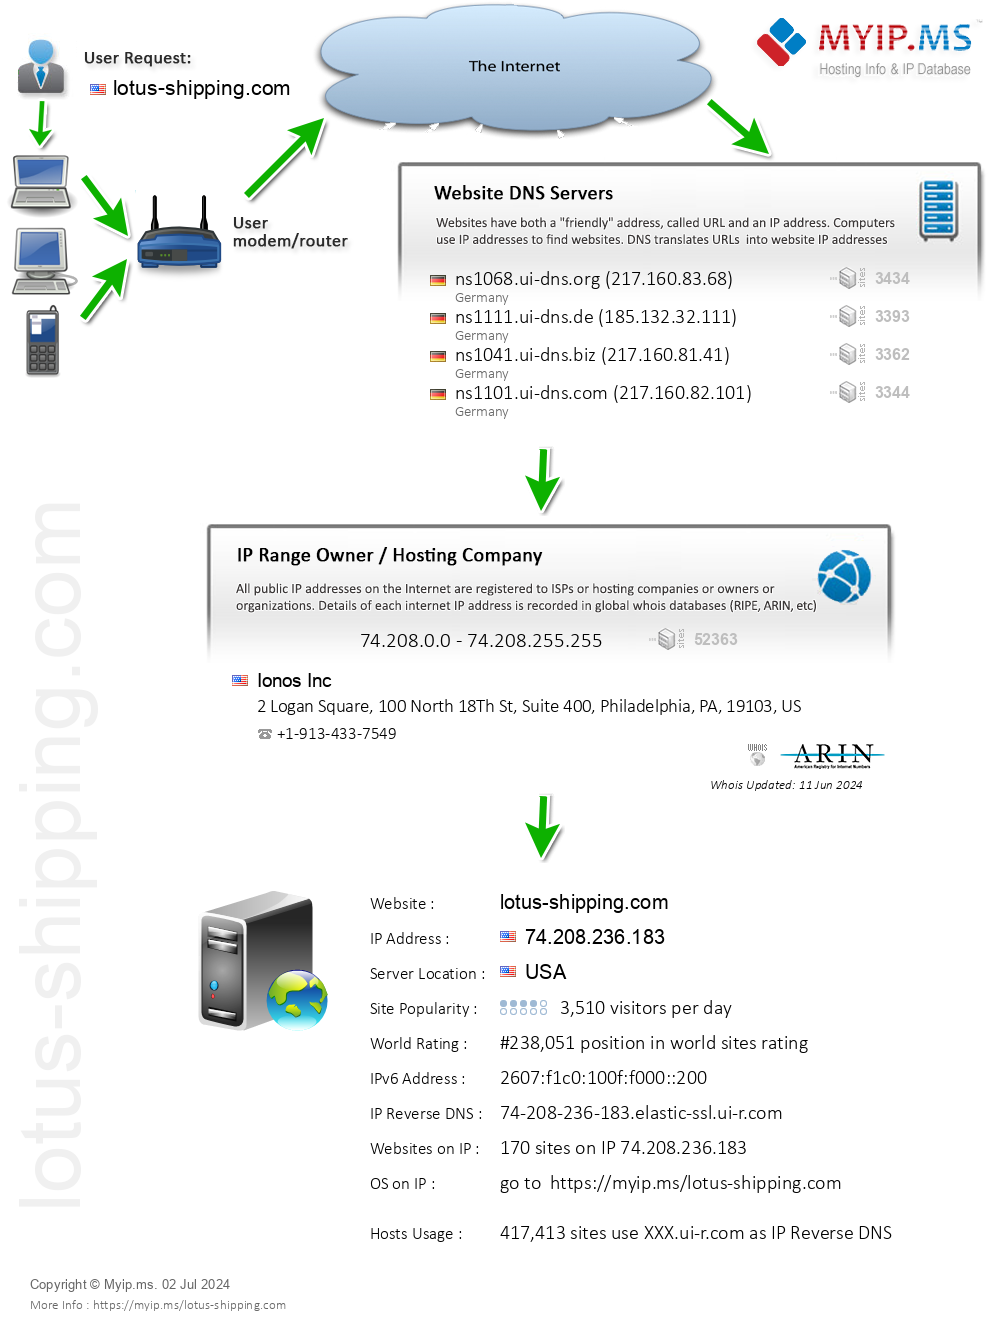 Lotus-shipping.com - Website Hosting Visual IP Diagram